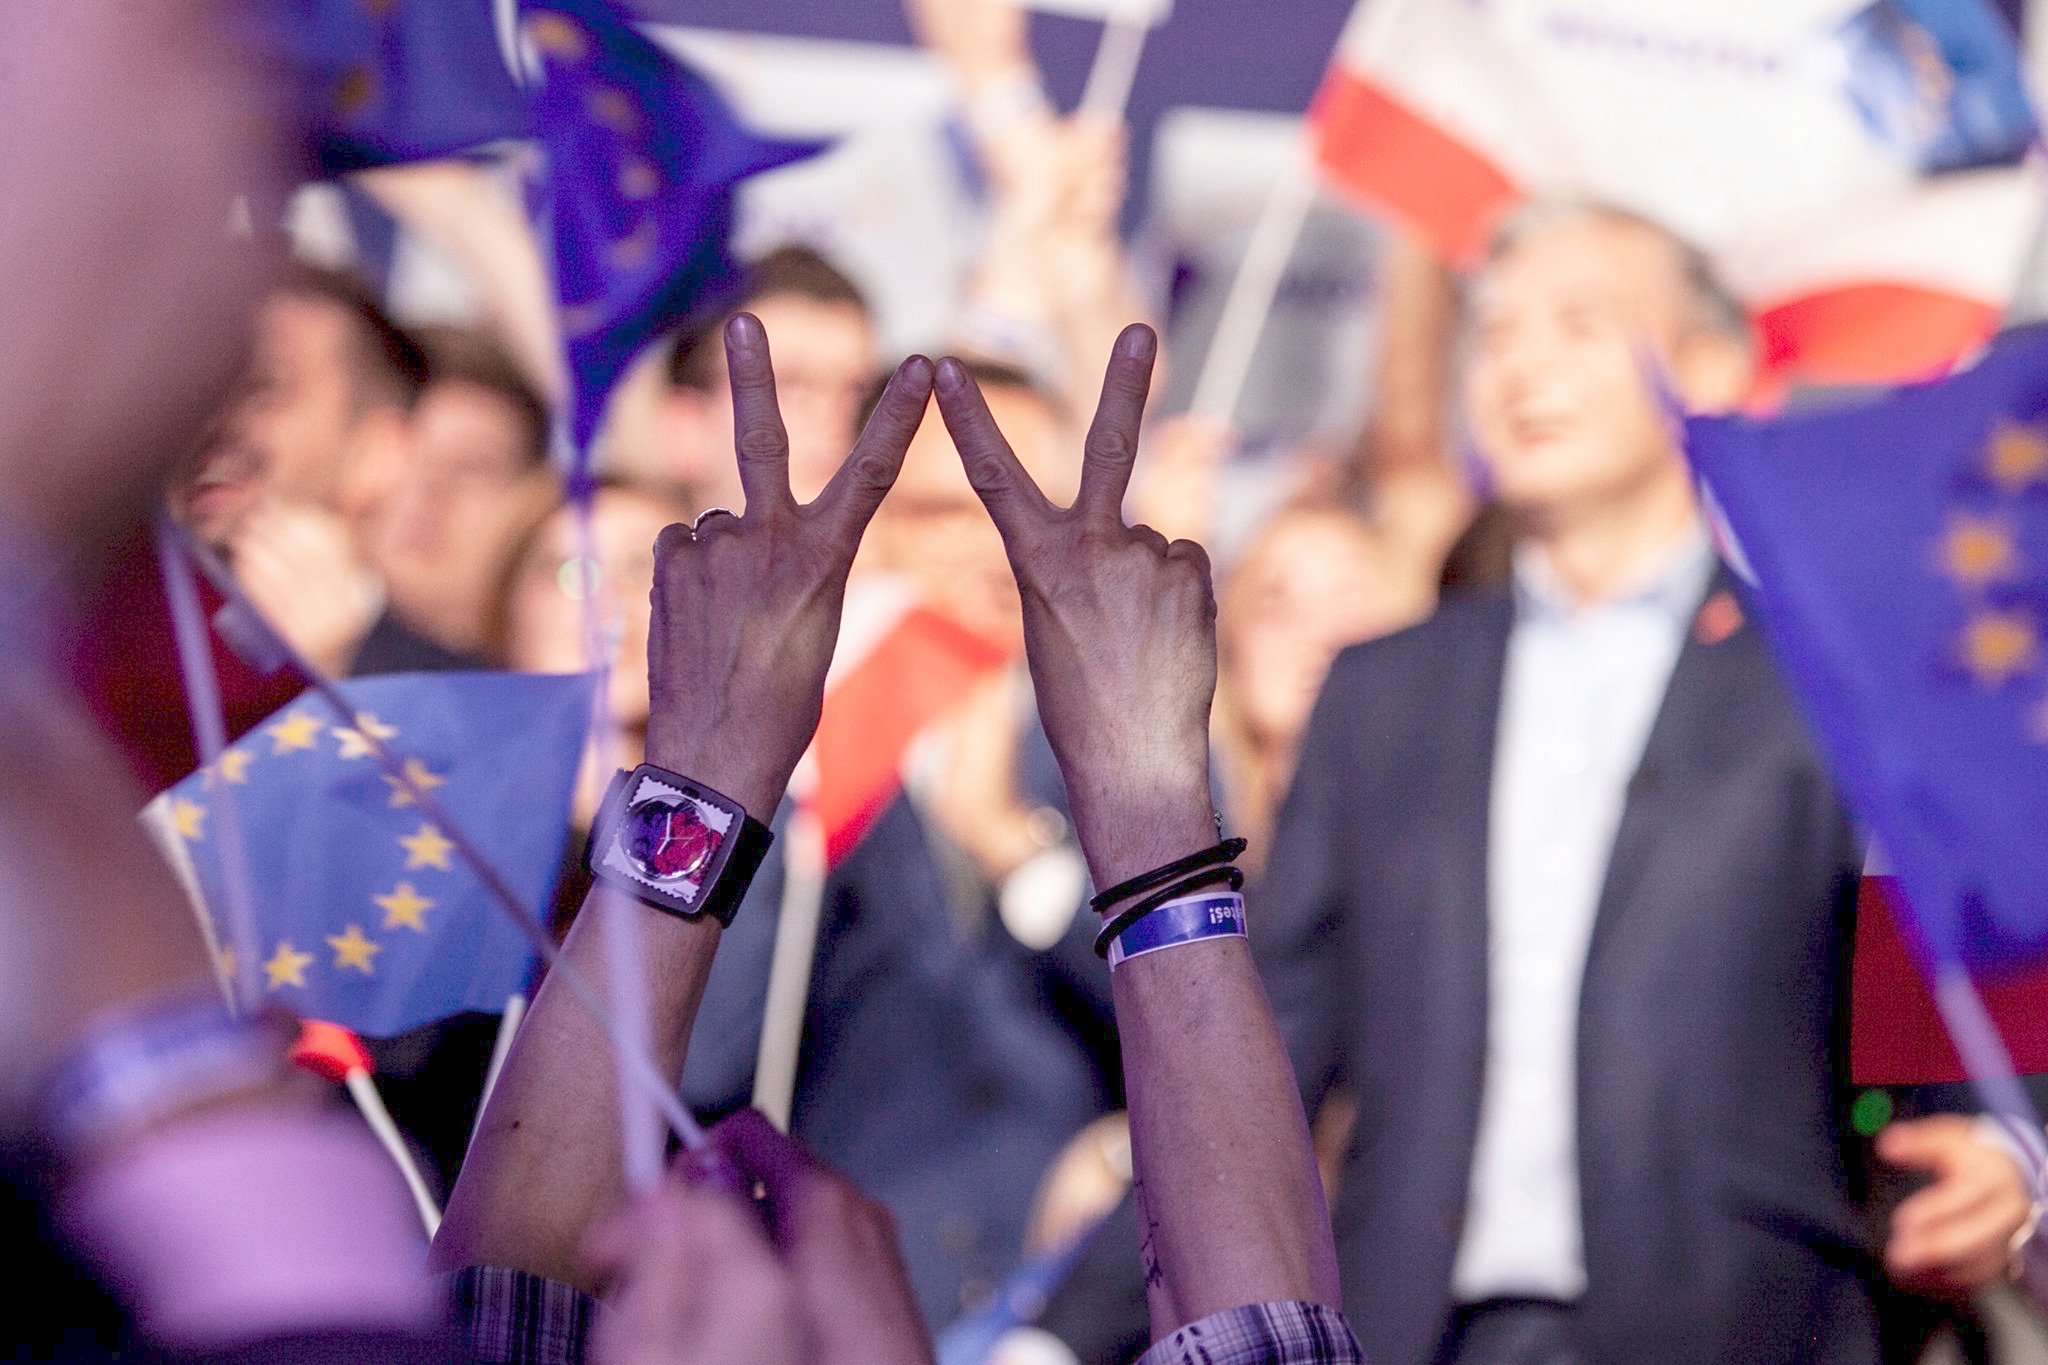 Europa polariseert: extreemrechts groeit, maar pro-Europese partijen winnen verkiezingen